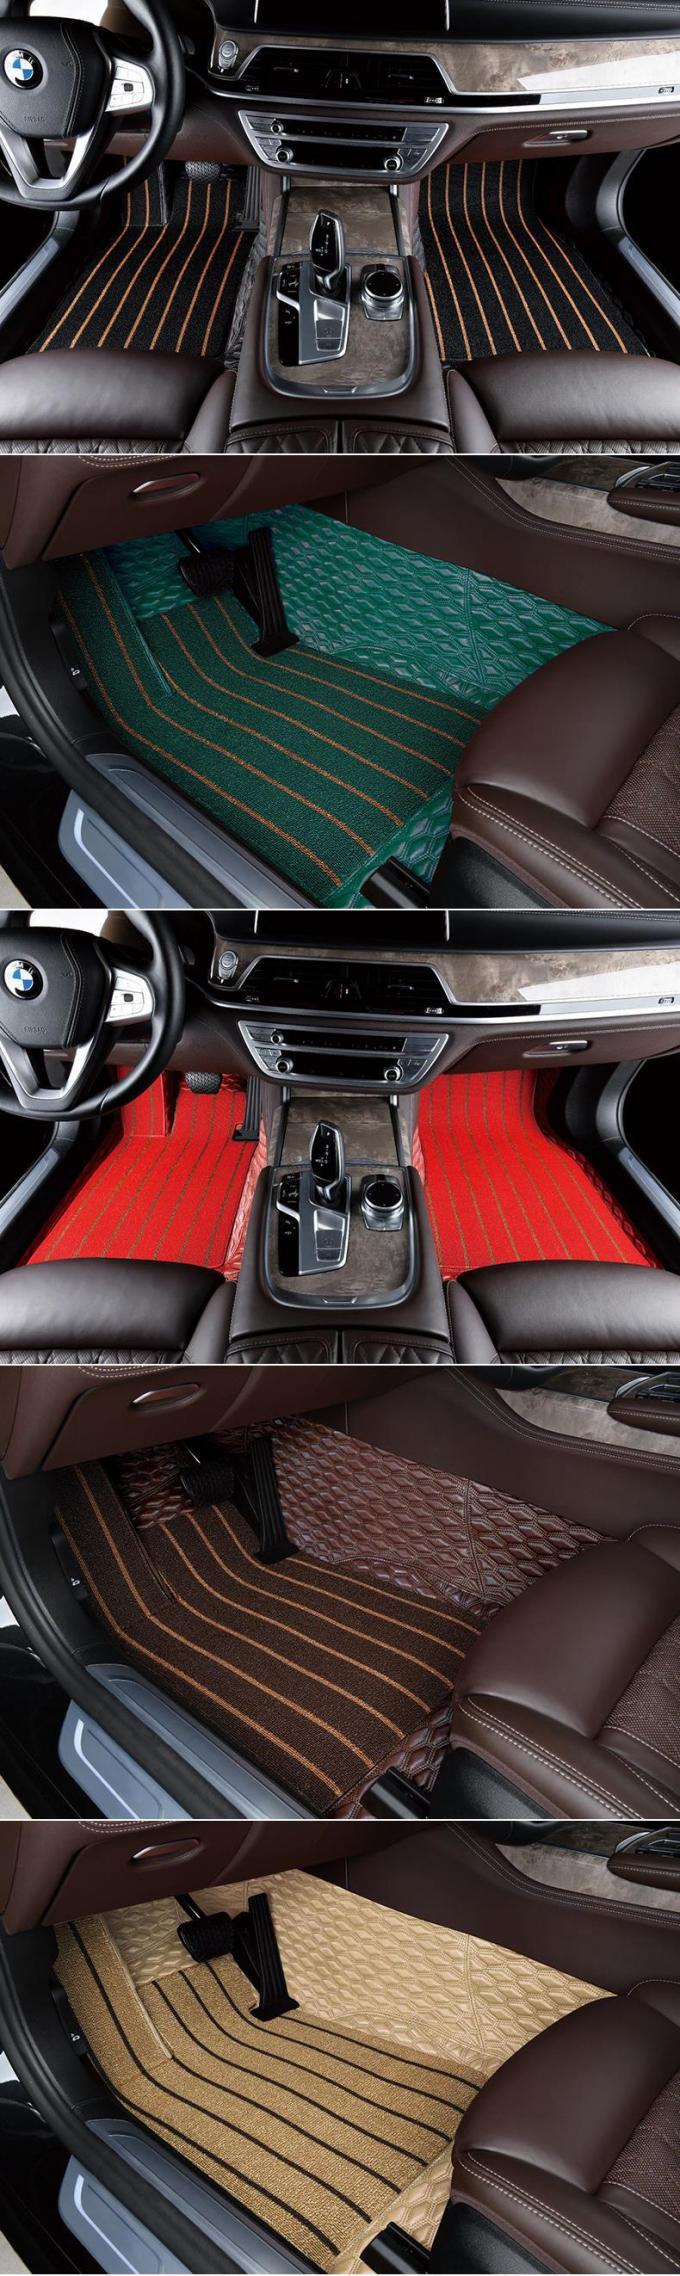 Manufacture : Textilene Easy clean, Waterproof Non-Slip Best Floor Mats For Cars 0